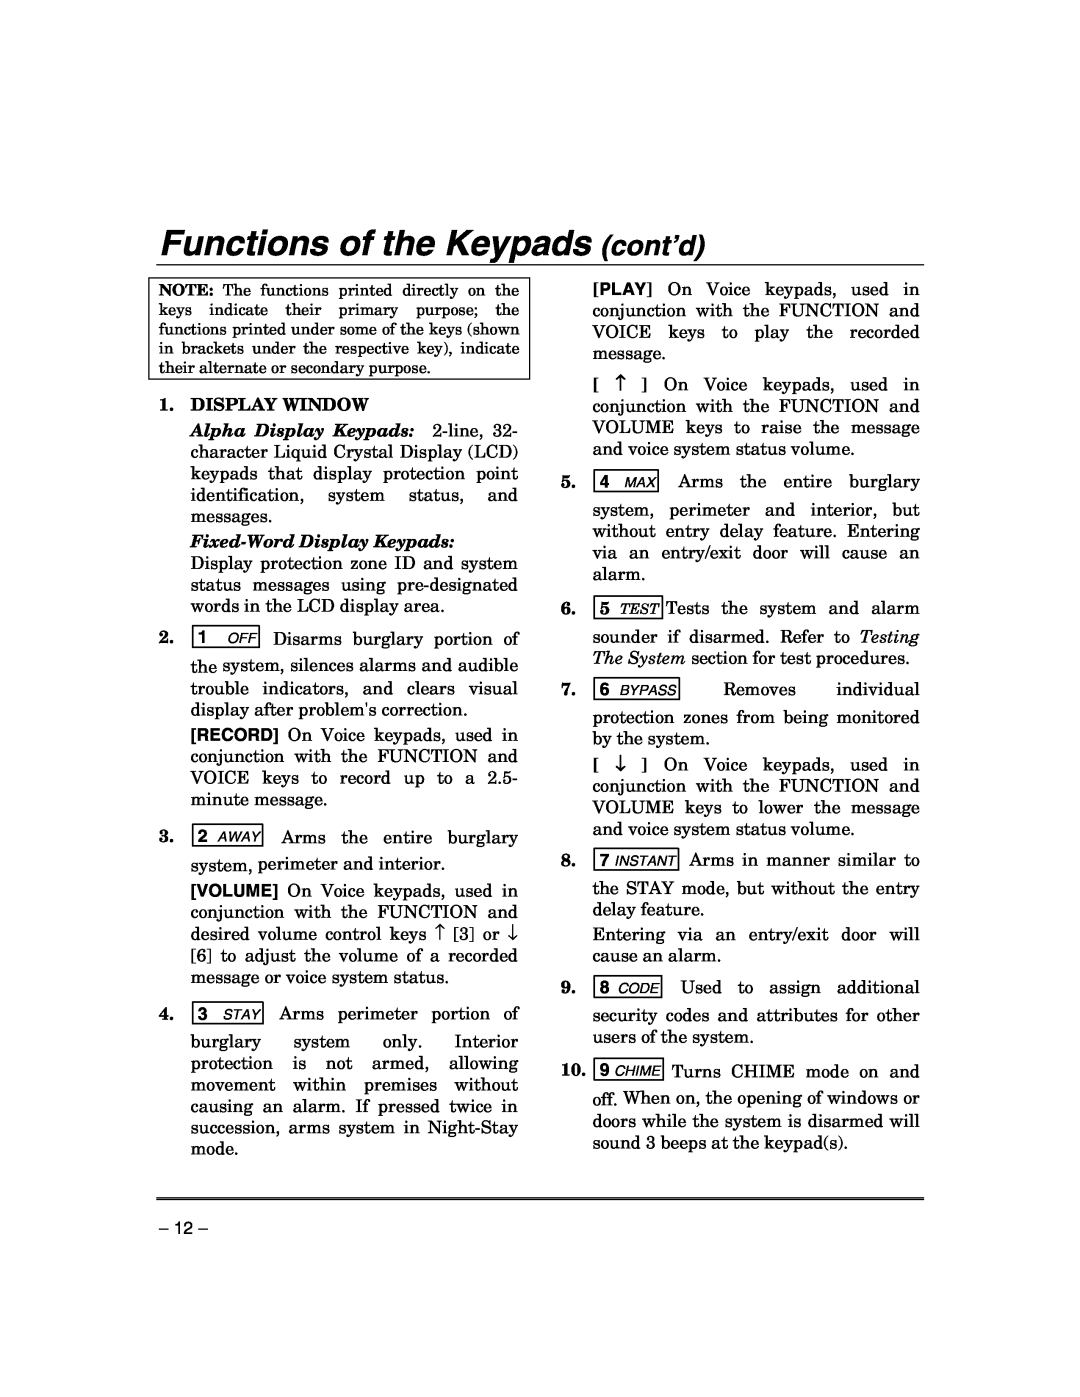 Honeywell VISTA-21IPSIA manual Functions of the Keypads cont’d, Display Window 